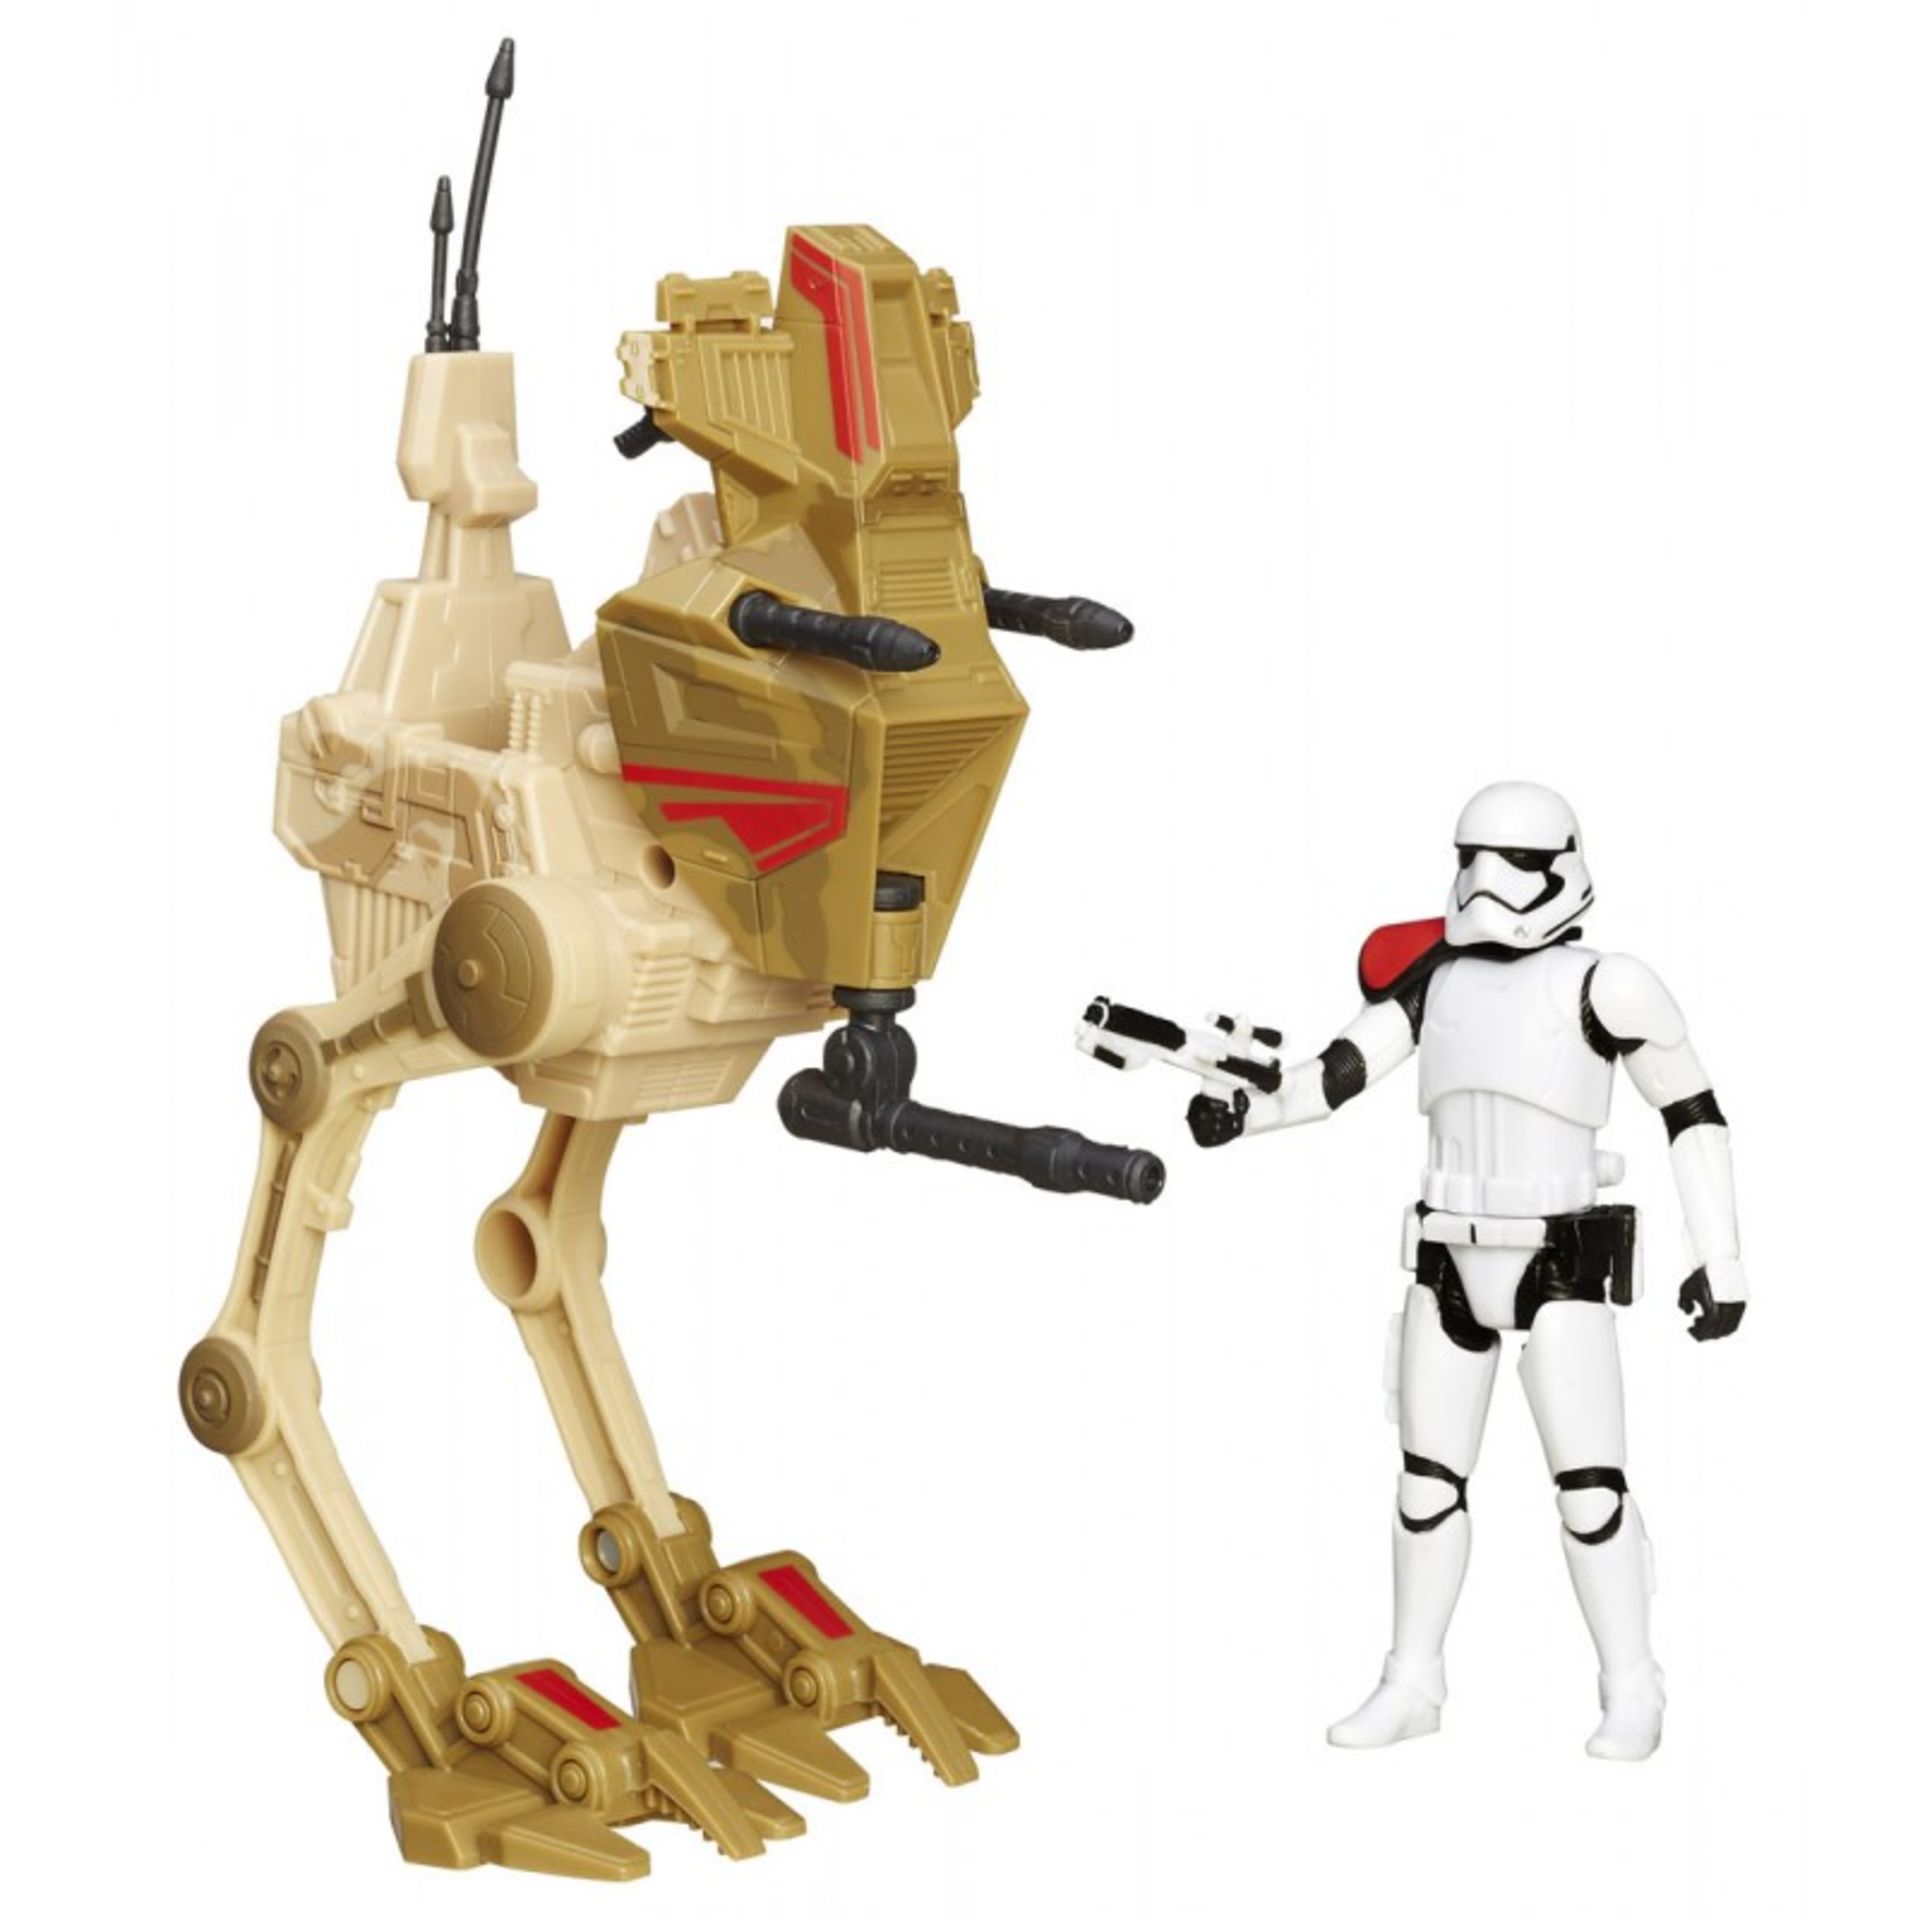 V Brand New Star Wars The Force Awakens Desert Assault Walker - Online Price £32.99 (My Geek Box)